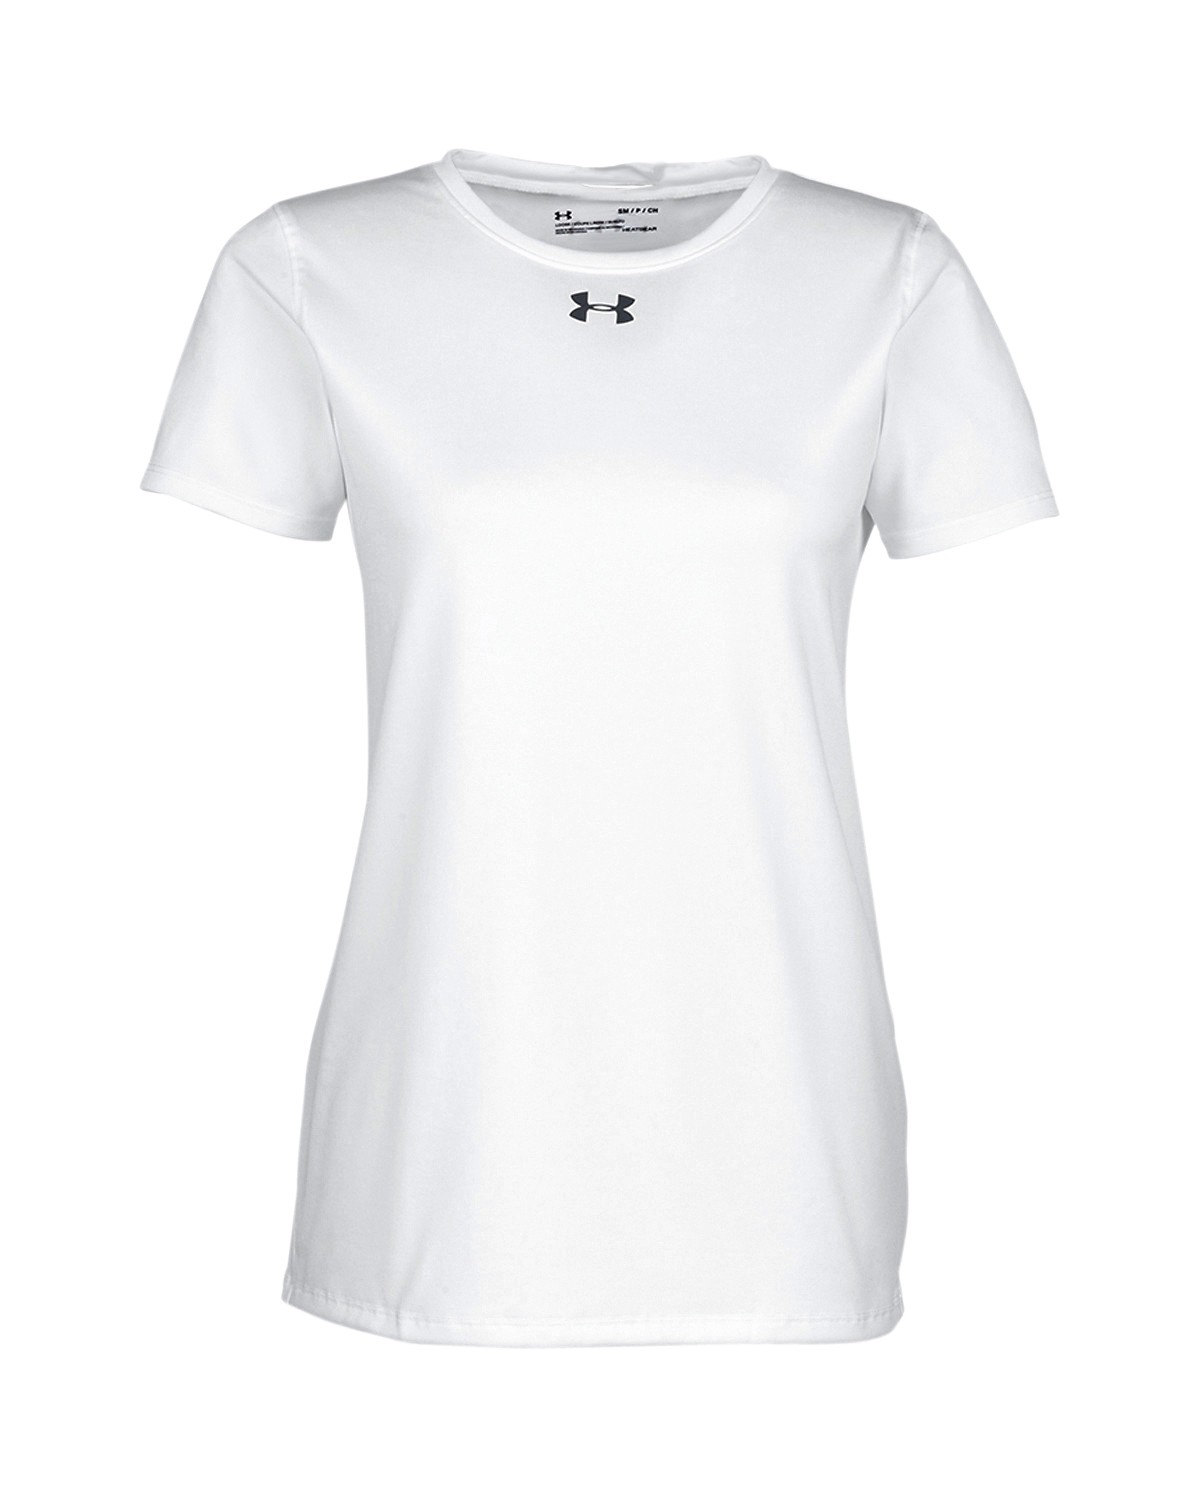 Under Armour Ladies' Locker T-Shirt 1305510 - Health Care Logo Wear